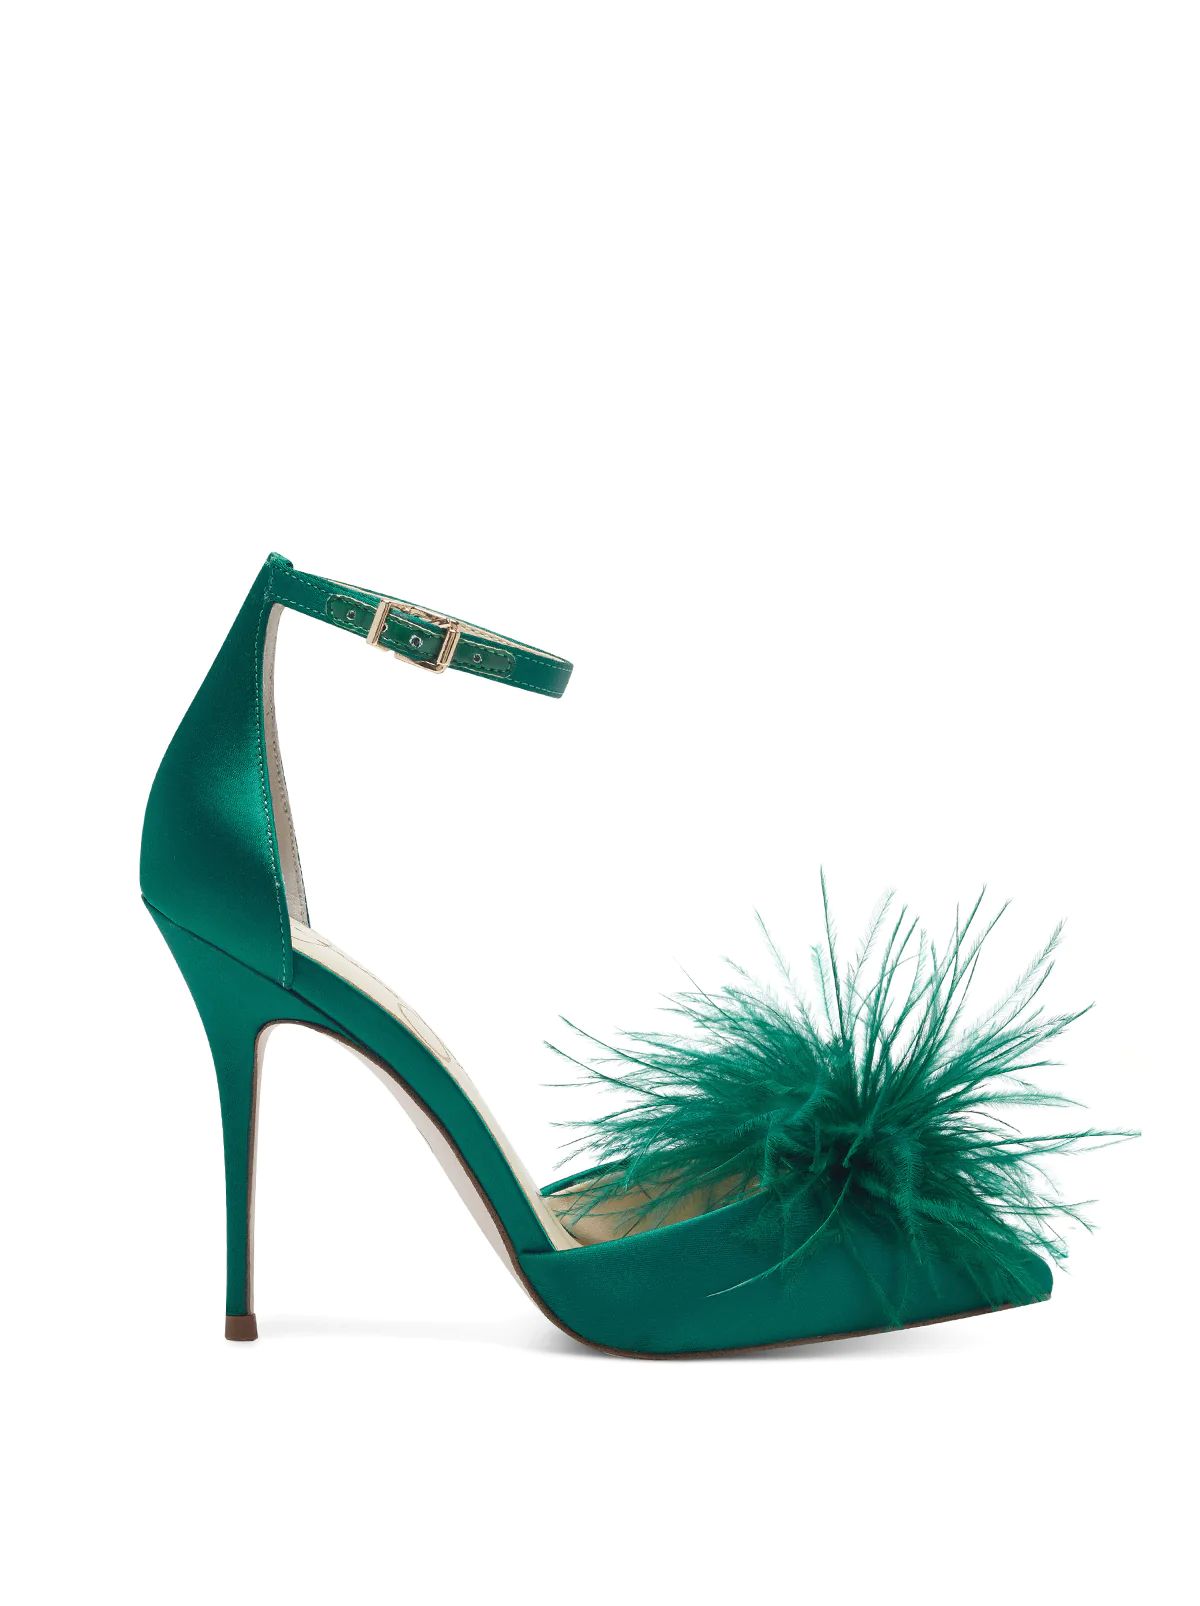 Wolistie High Heel in Green | Jessica Simpson E Commerce